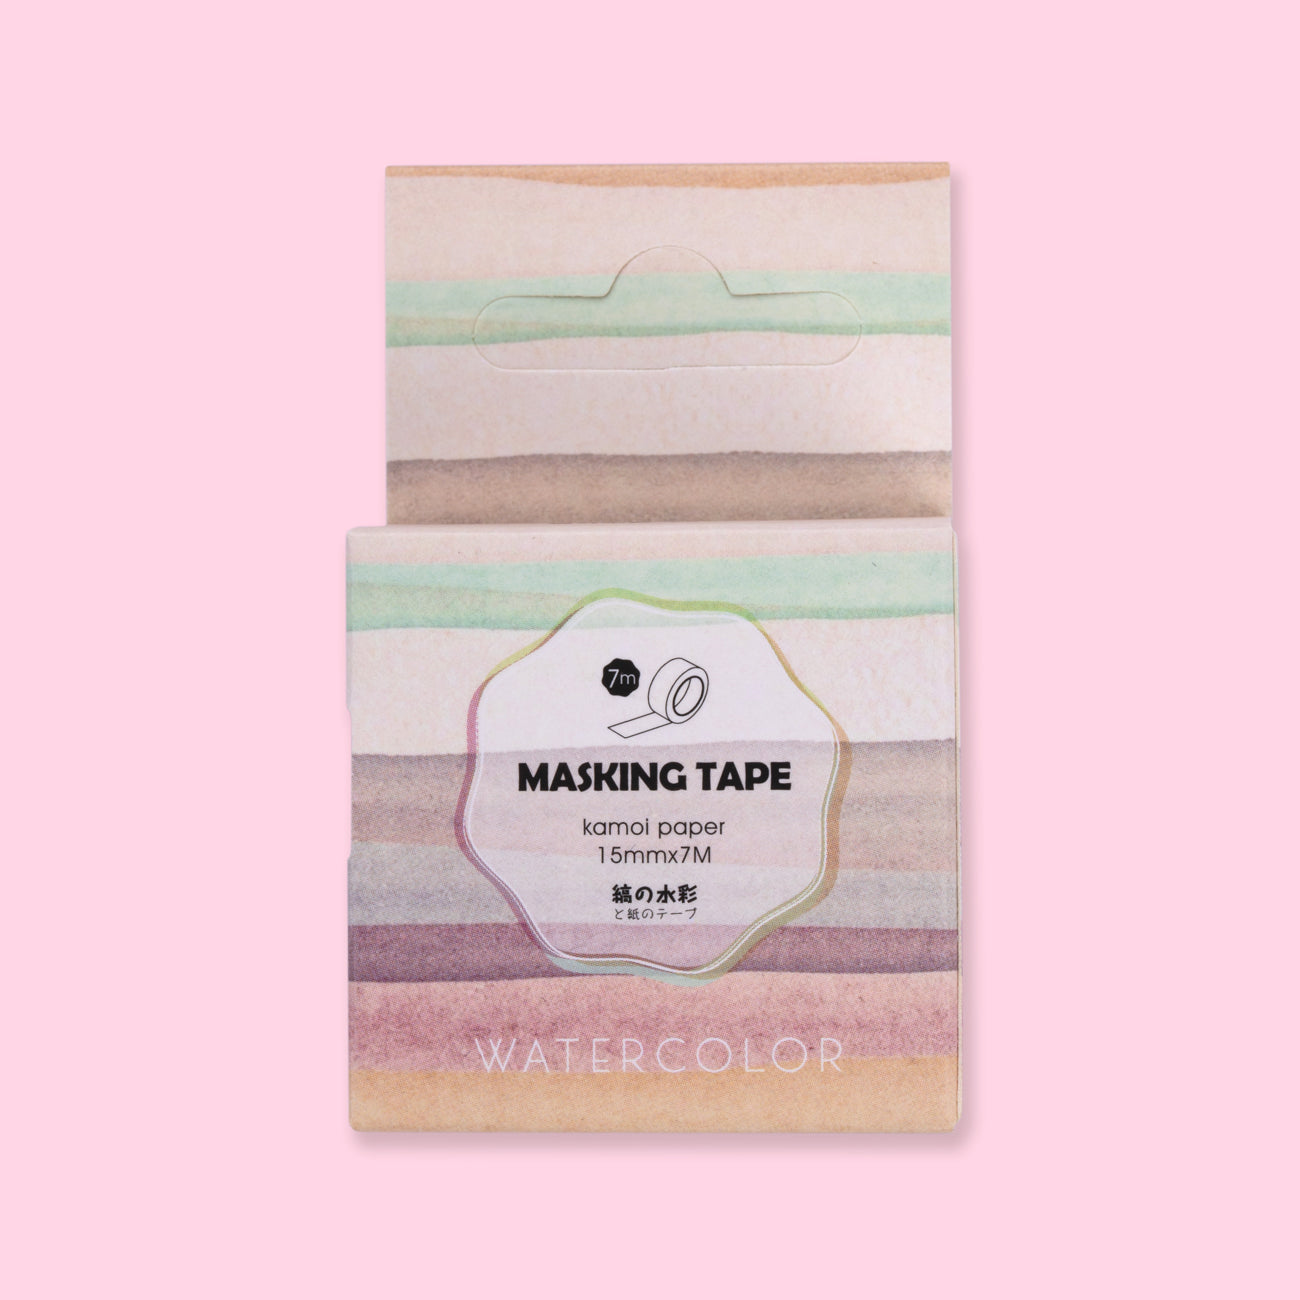 Watercolor Washi Tape